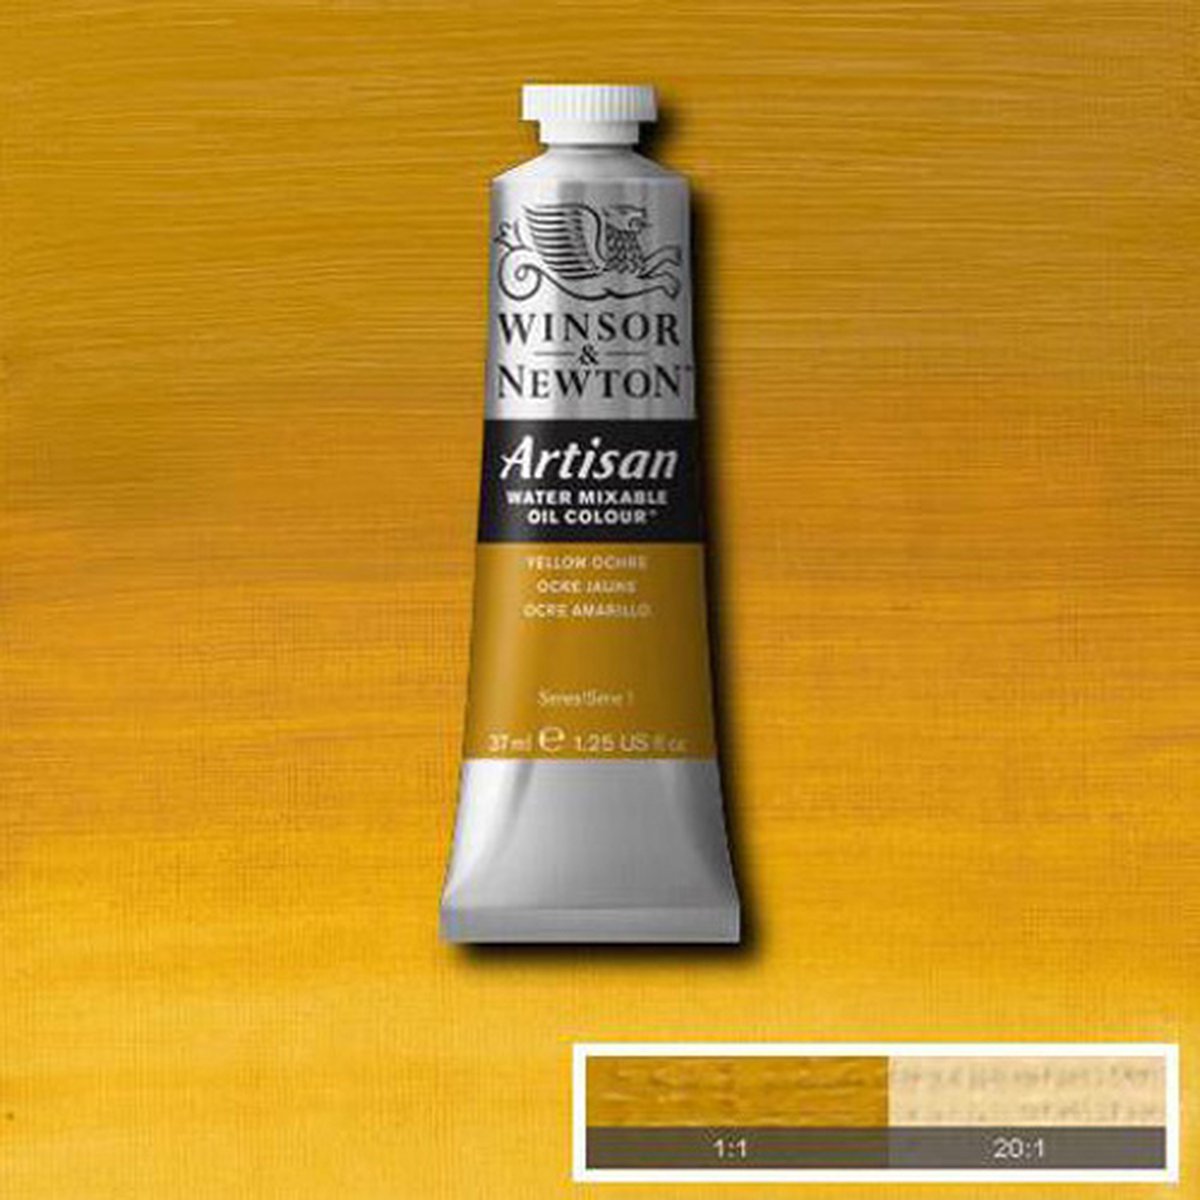 Winsor & Newton Artisan Water Mixable Oil Colour Yellow Ochre 744 37ml